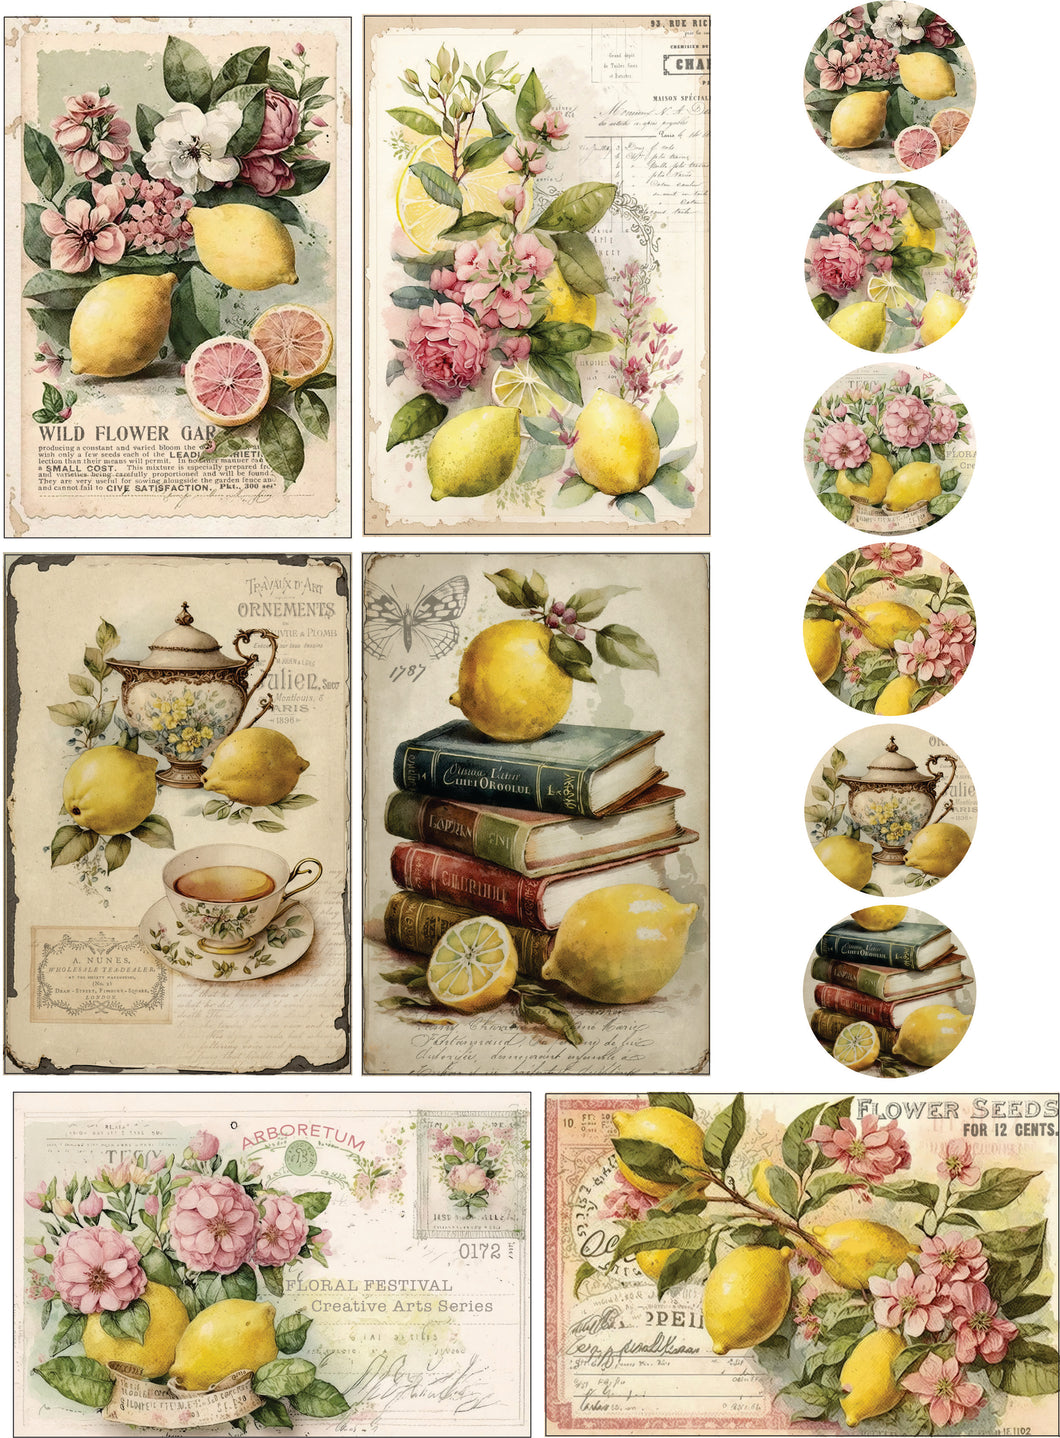 Lemons and Pink themed postcards